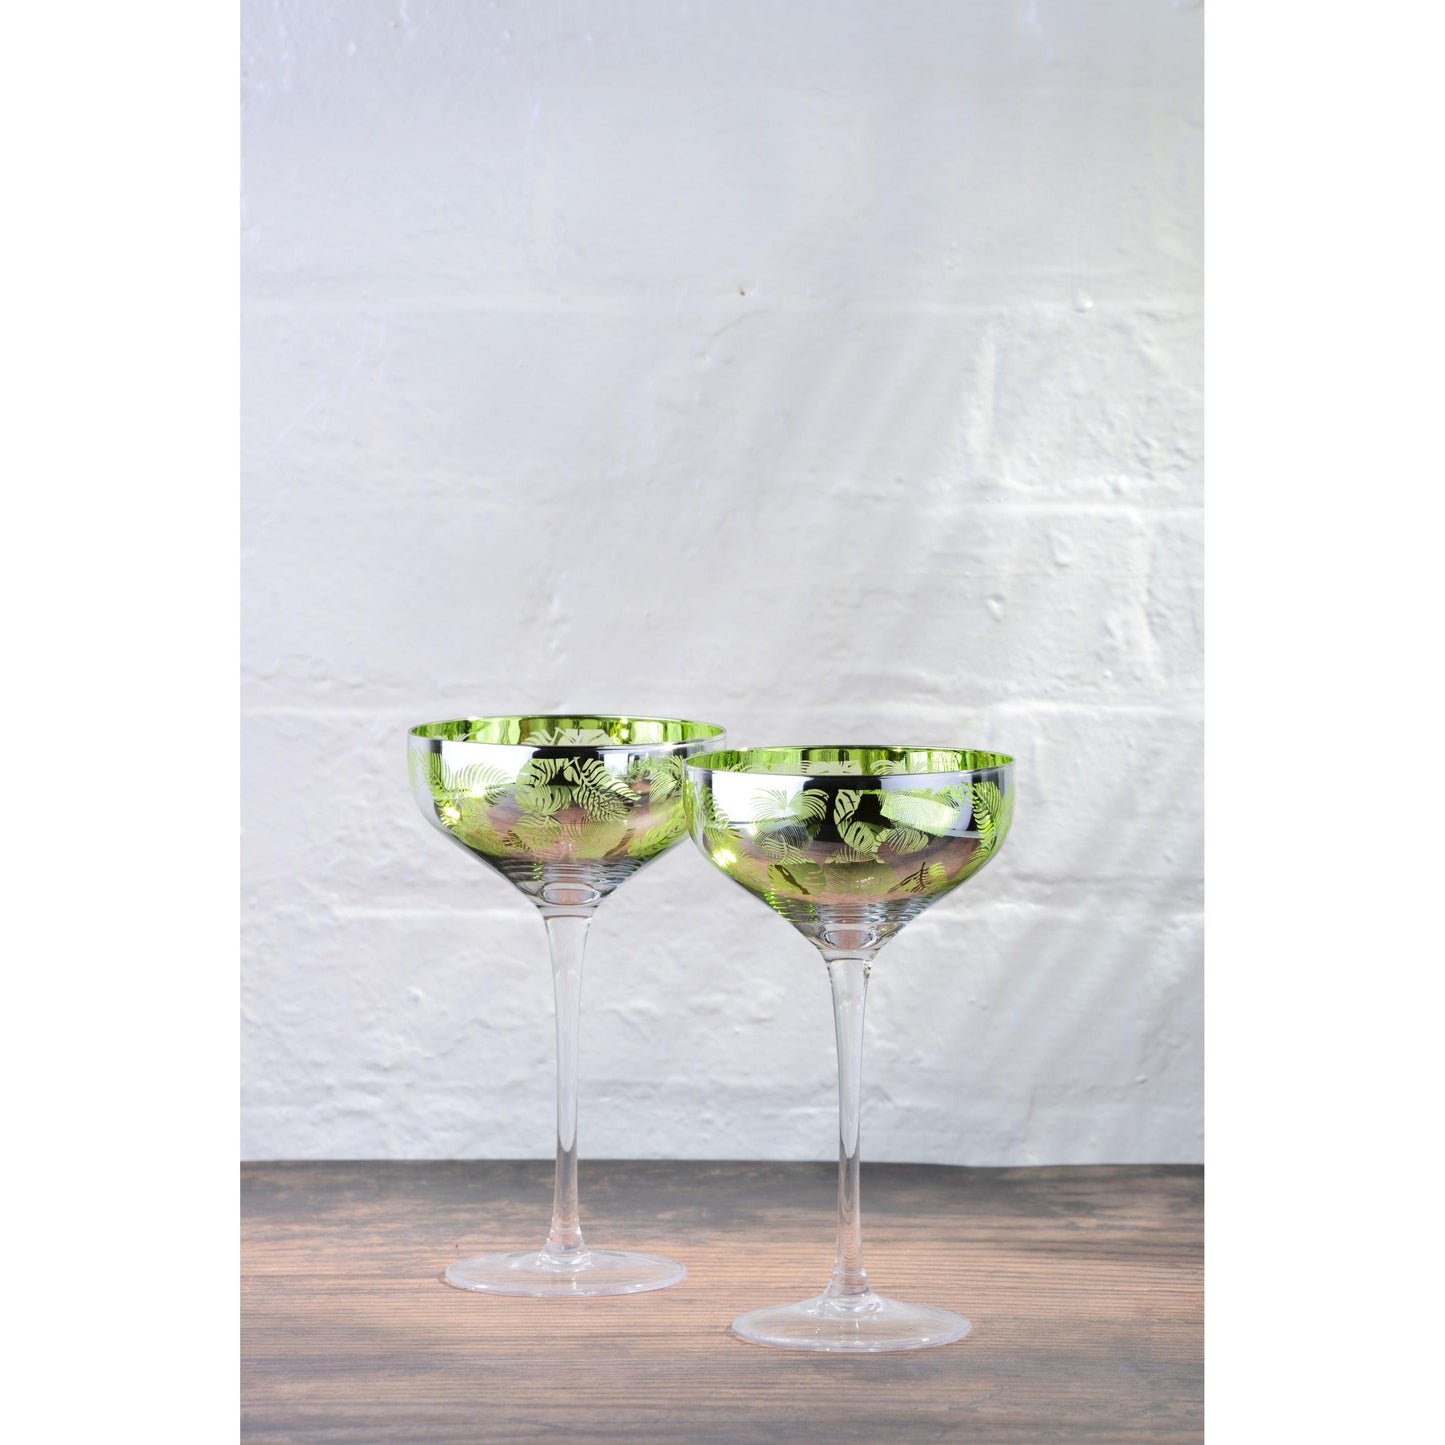 Artland Glass Tropical Leaves Champagne Saucer - Set of 2 Glasses